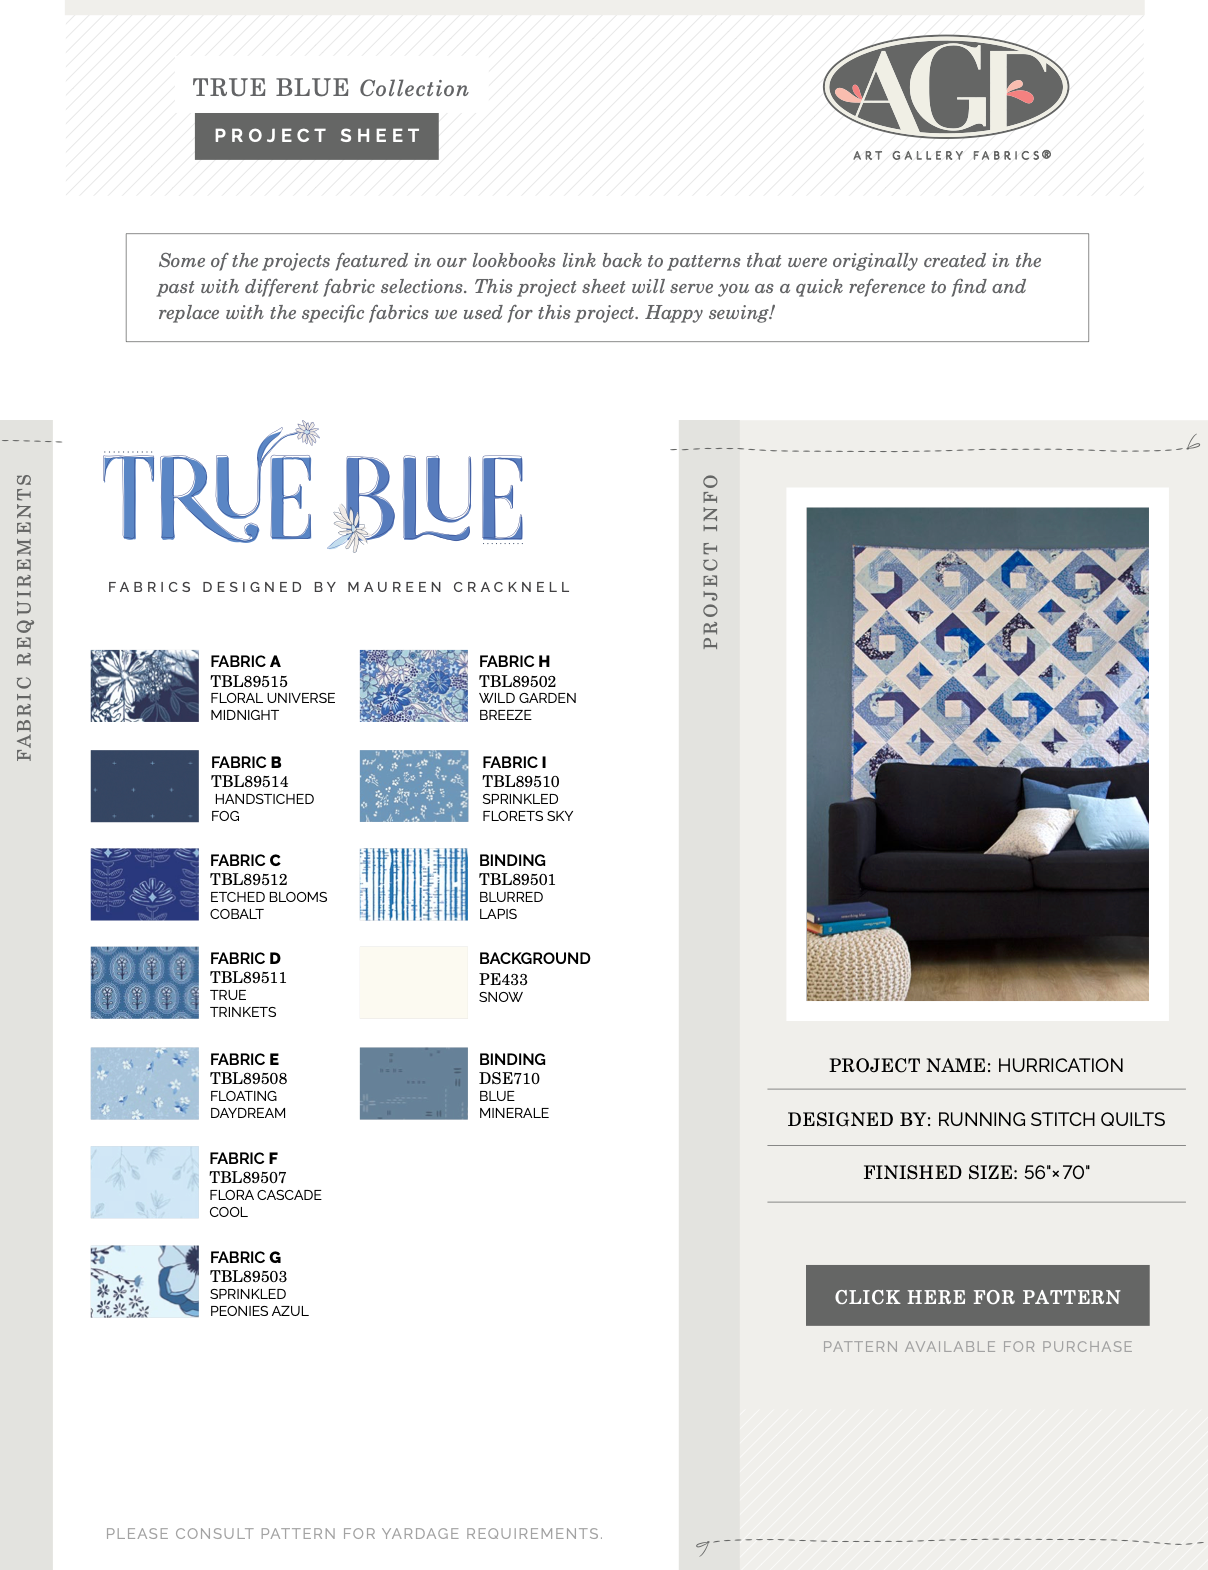 True Blue par Maureen Cracknell : Kit de courtepointe Hurrication